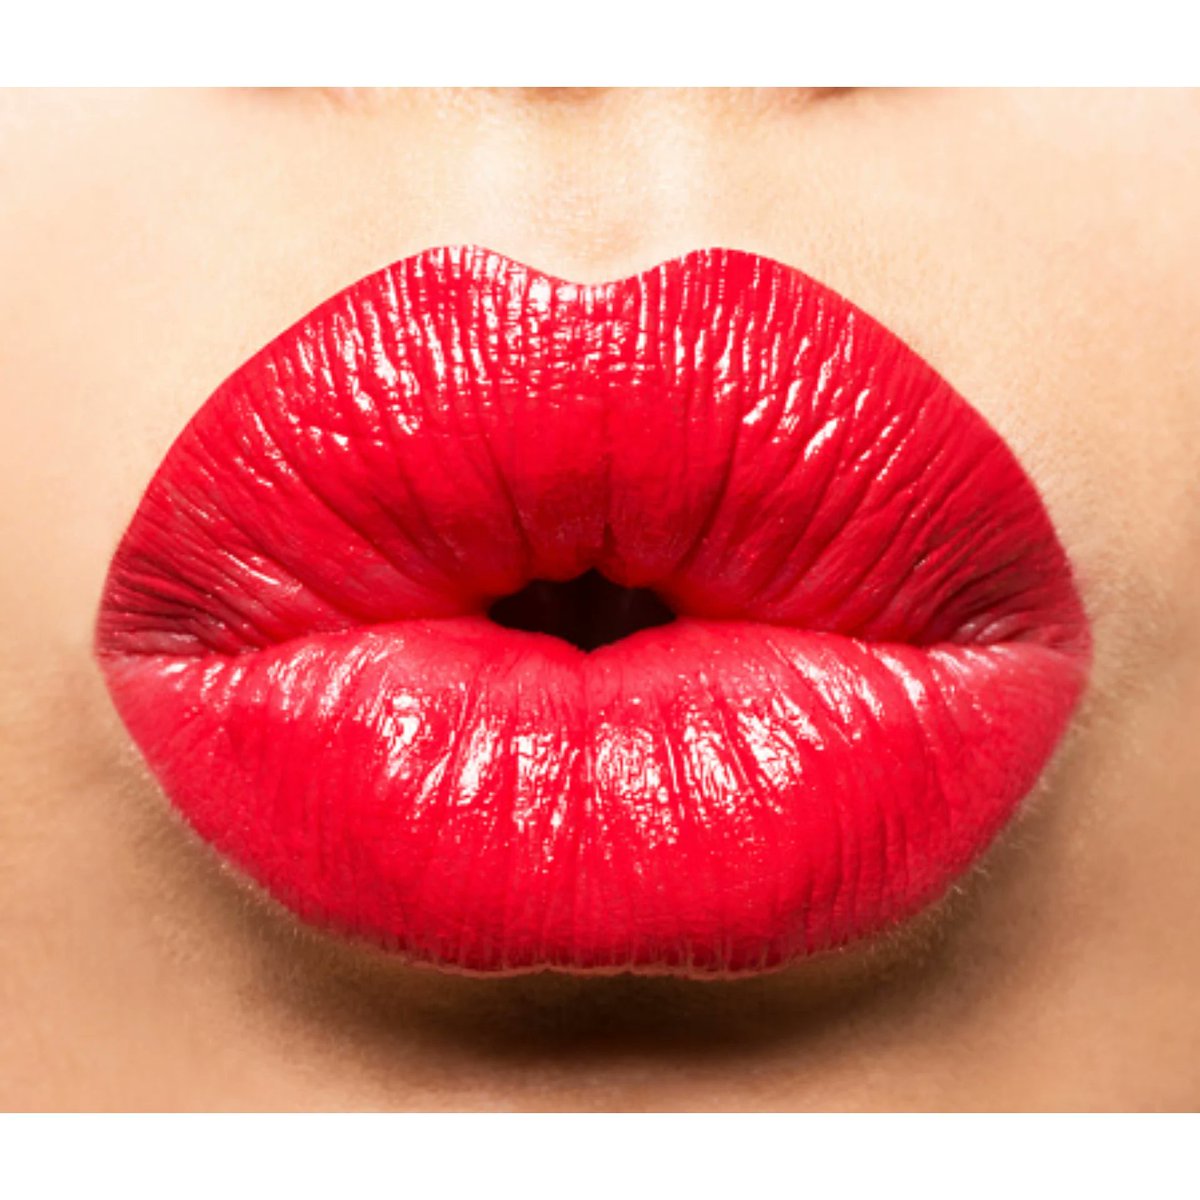 Red Lips Poppin! 💄💋
#beauty #makeup #BeautyOfTheDay  #makeupoftheday #takiemoto #lashes #lipstick #makeuphack #beautyhacks #mua #beautytrends #hairtools #twittamibeautiful #eyelashes #makeupchallenge
#makeupaddict #beautytips #hair  #lipart #stylingwand  #skincare #new #3D